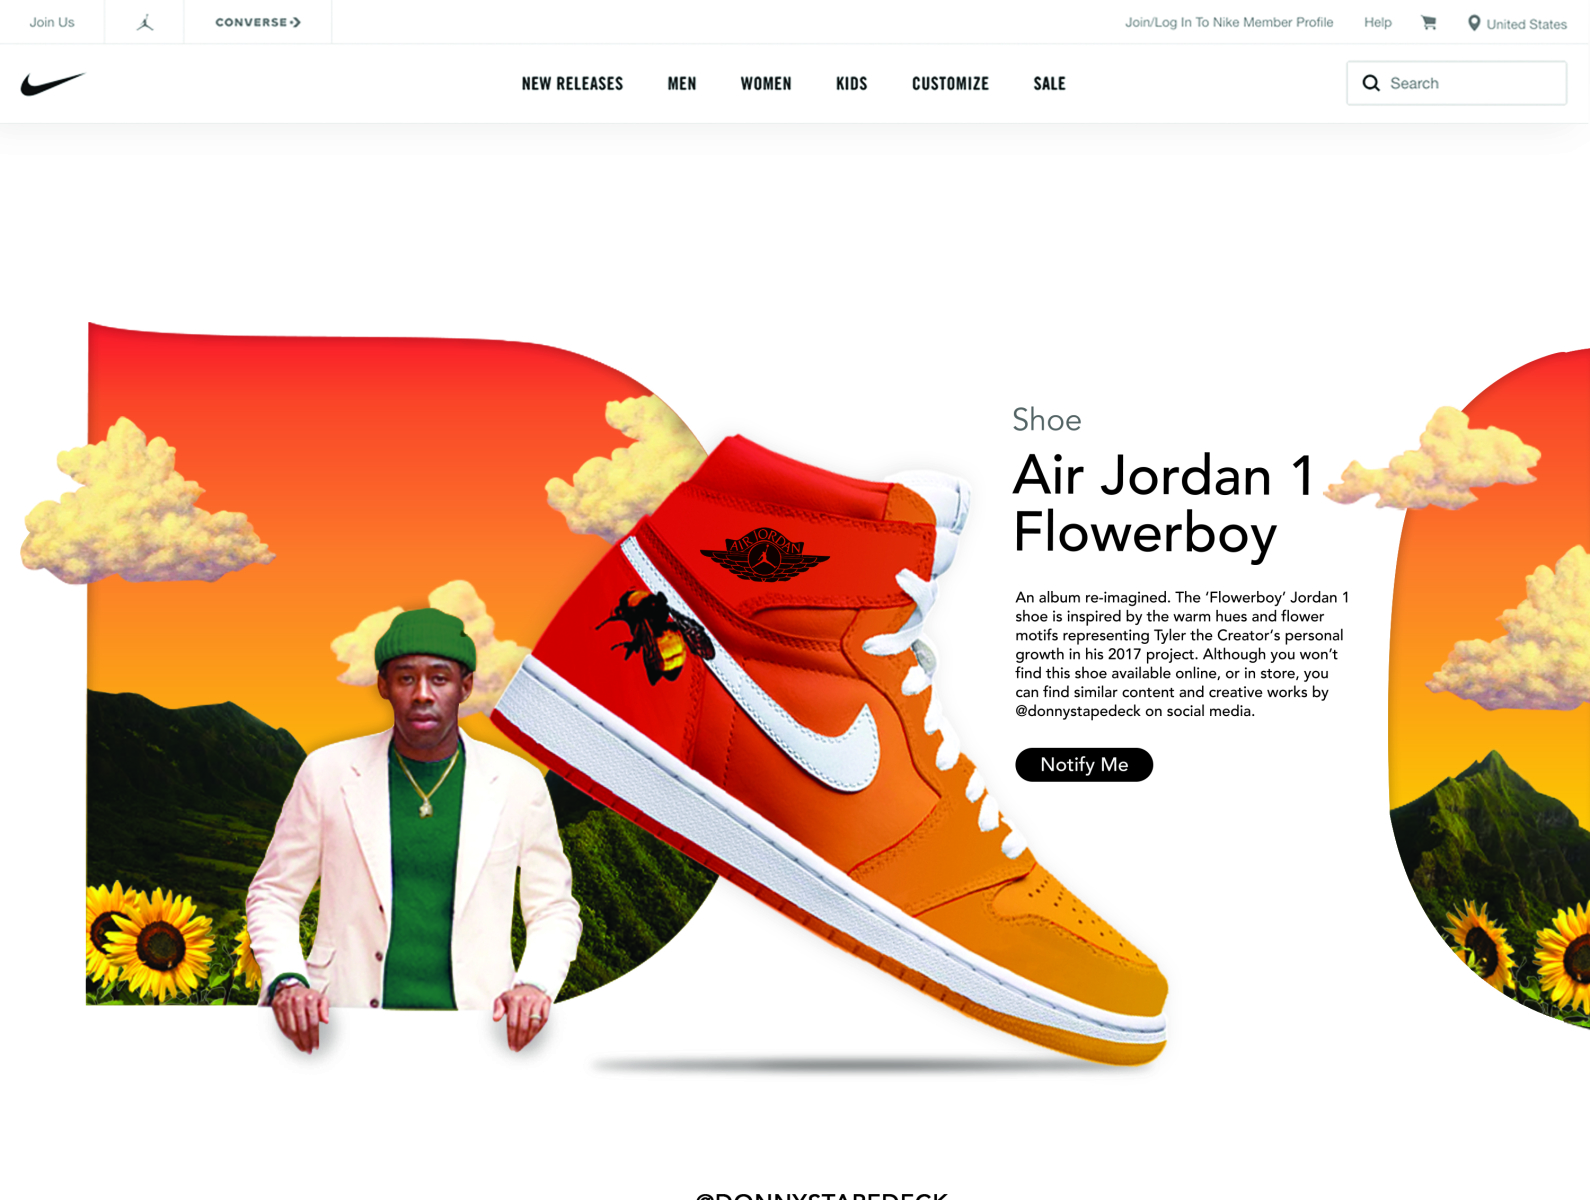 Creator 'Flowerboy' Air Jordan 1 